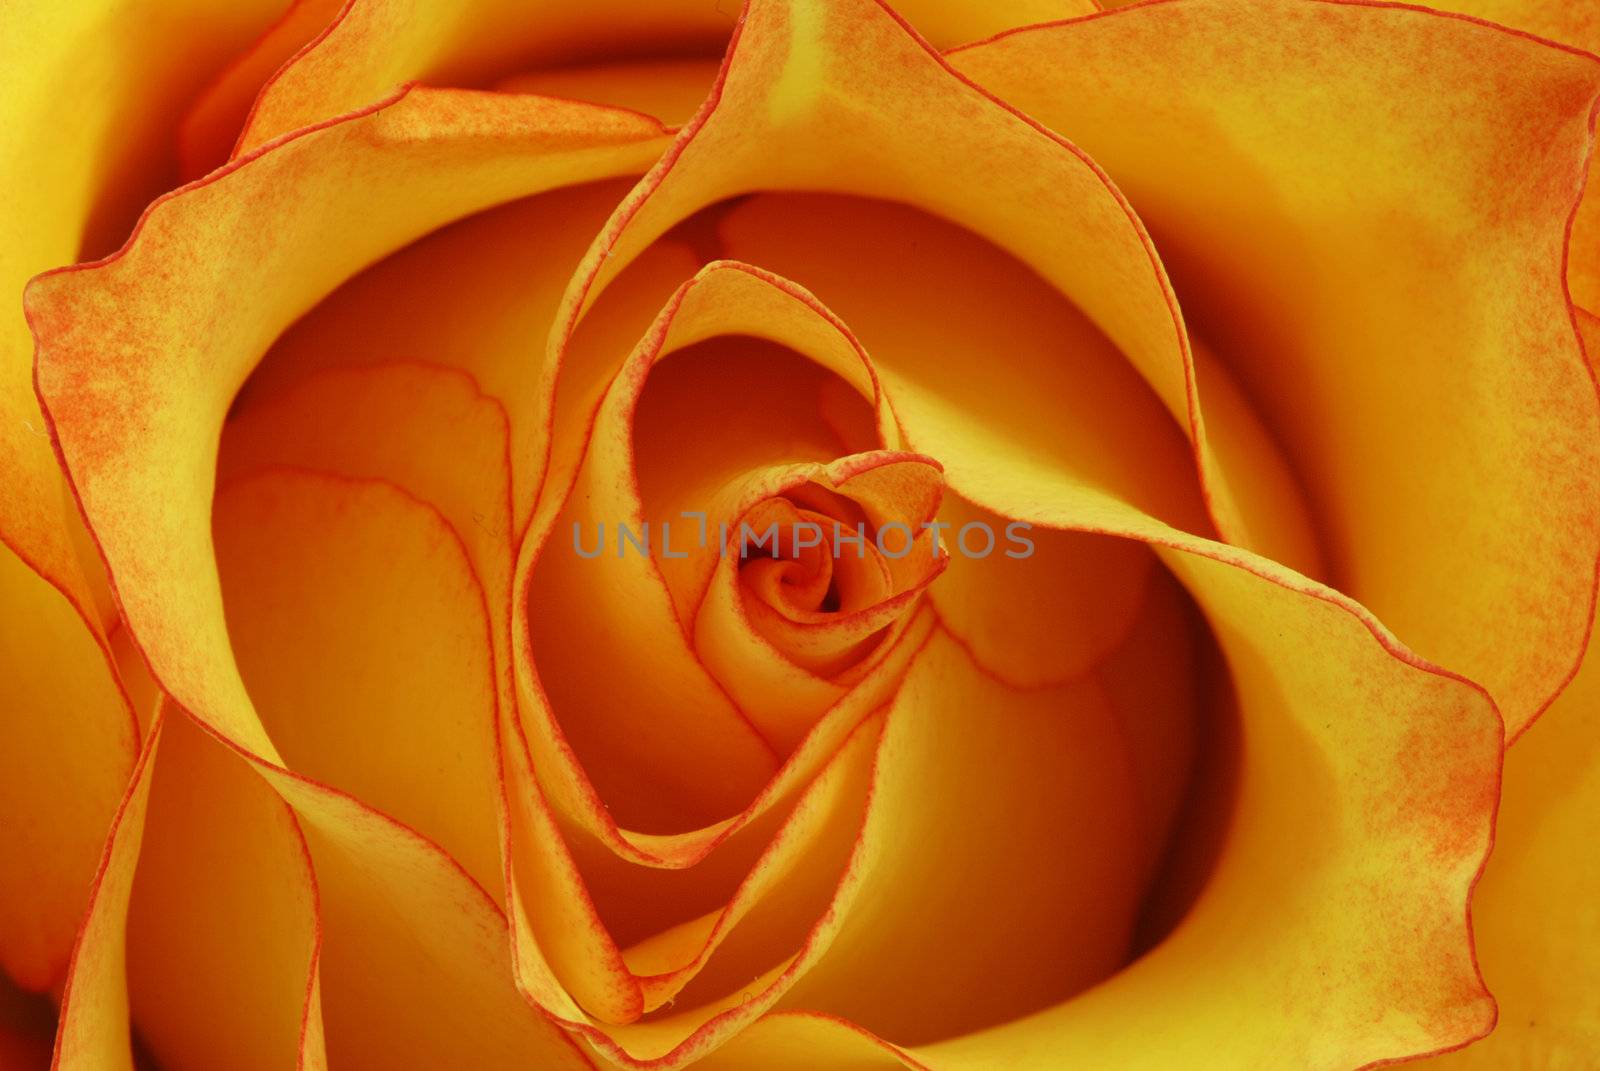 Macro shot of a orange rose blossom - beautiful layers of petals